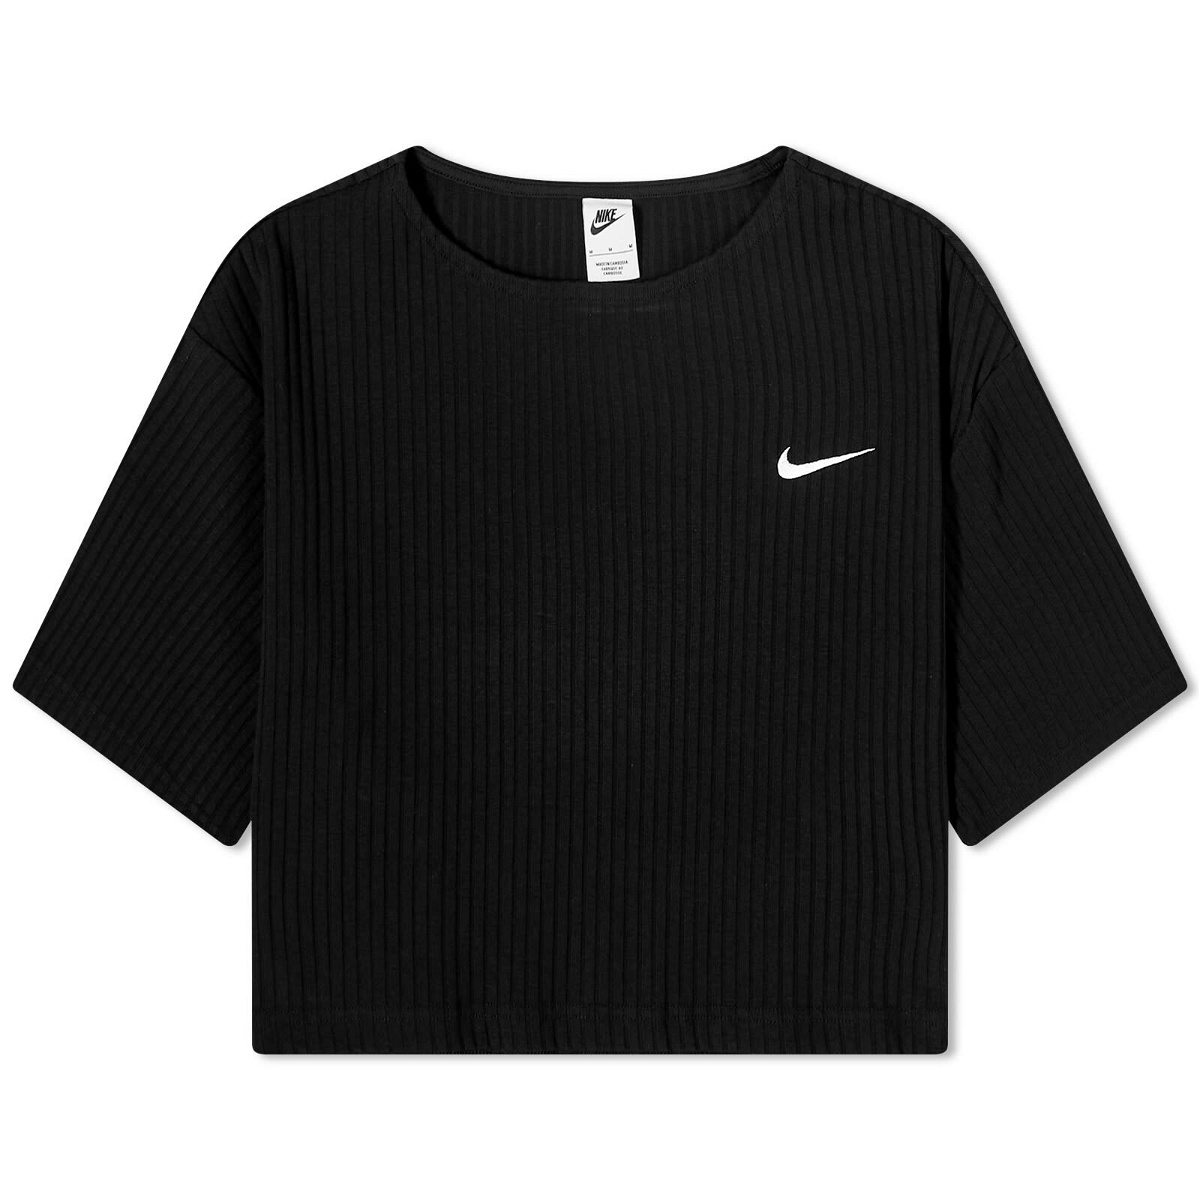 Nike Women's Ribbed Jersey Top in Black/White Nike